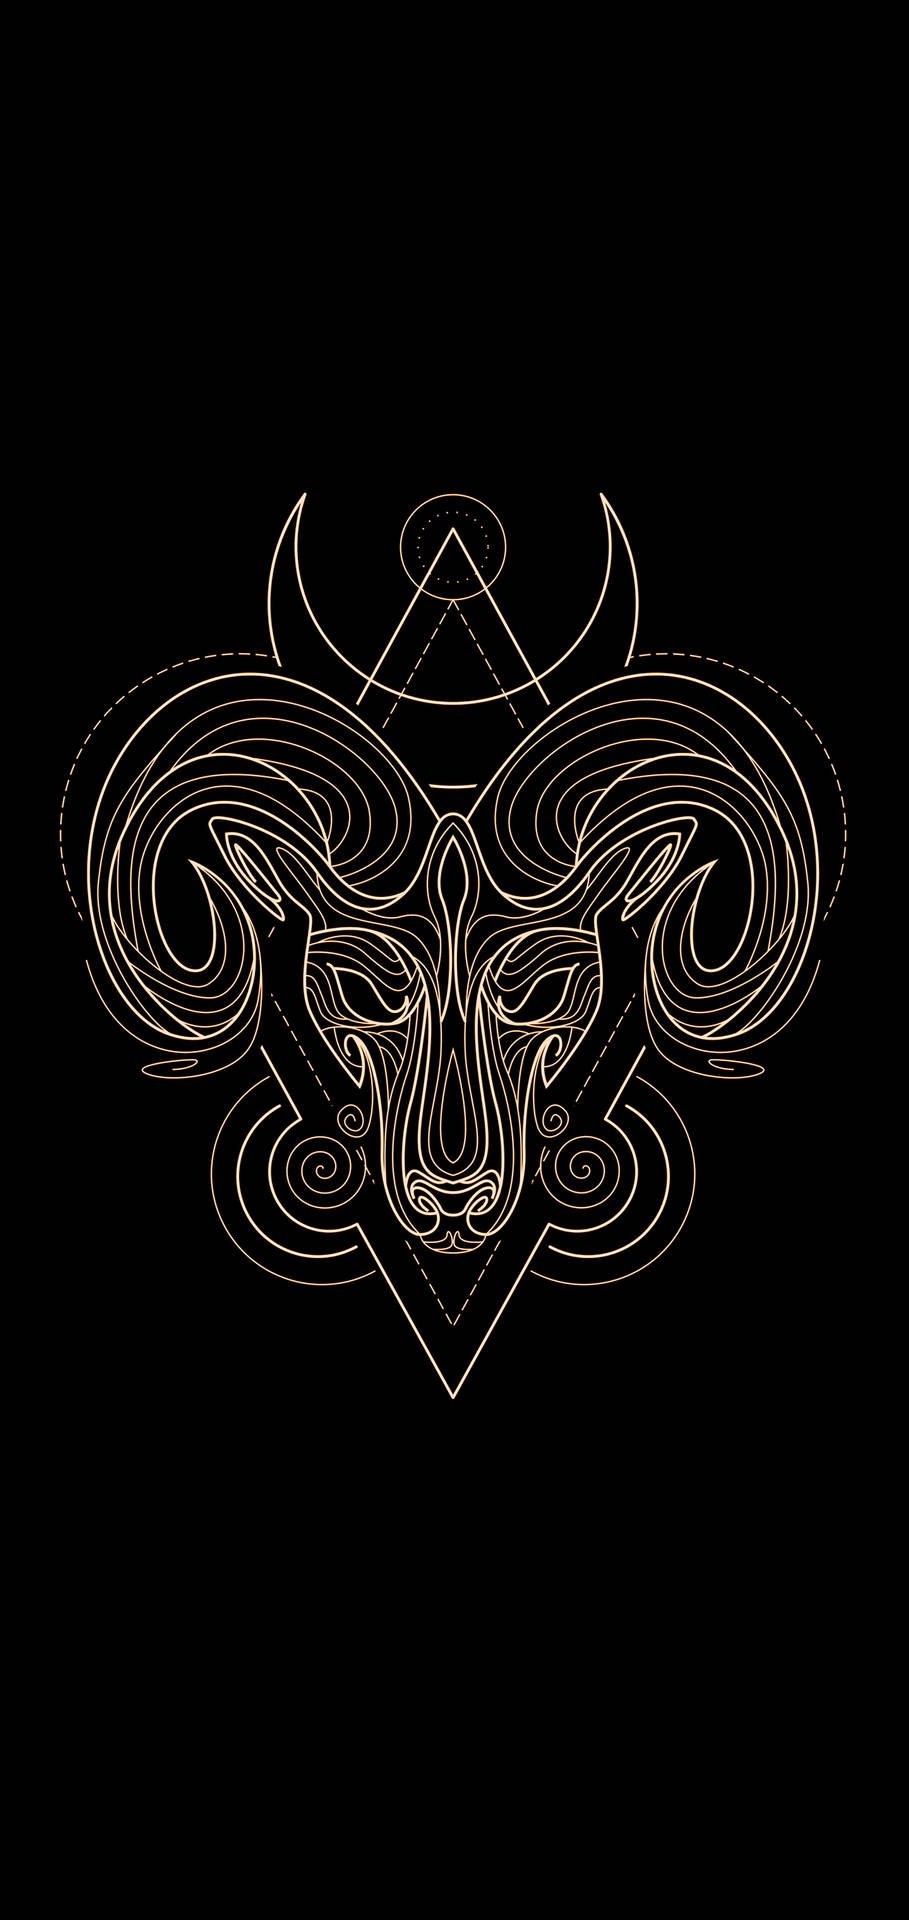 Download Aries White Ram Skull Digital Art Wallpaper